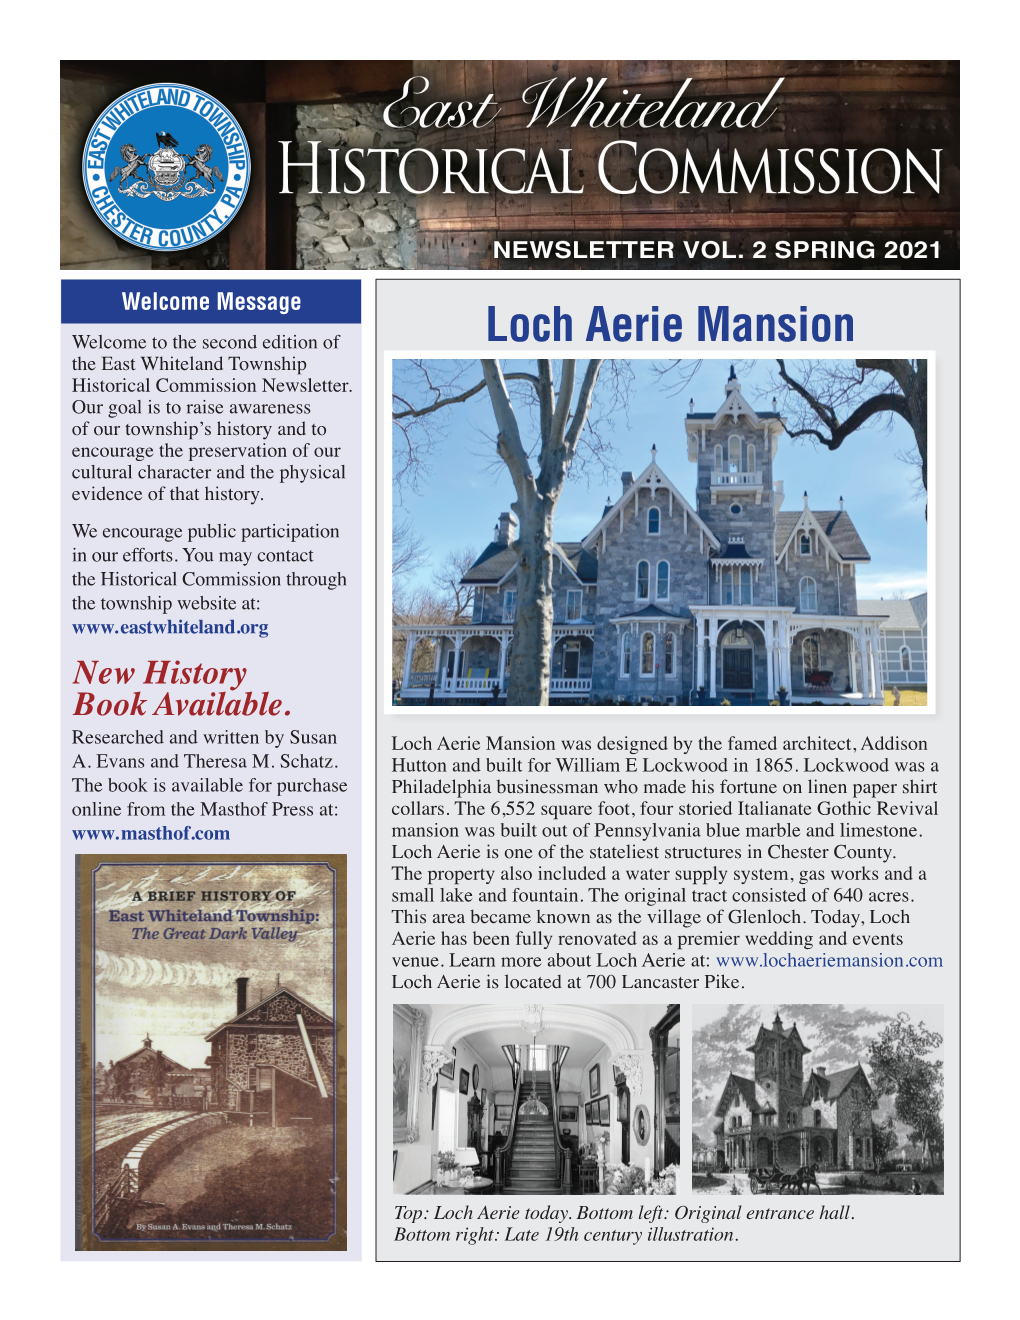 Historical Commission Newsletter Vol. 2